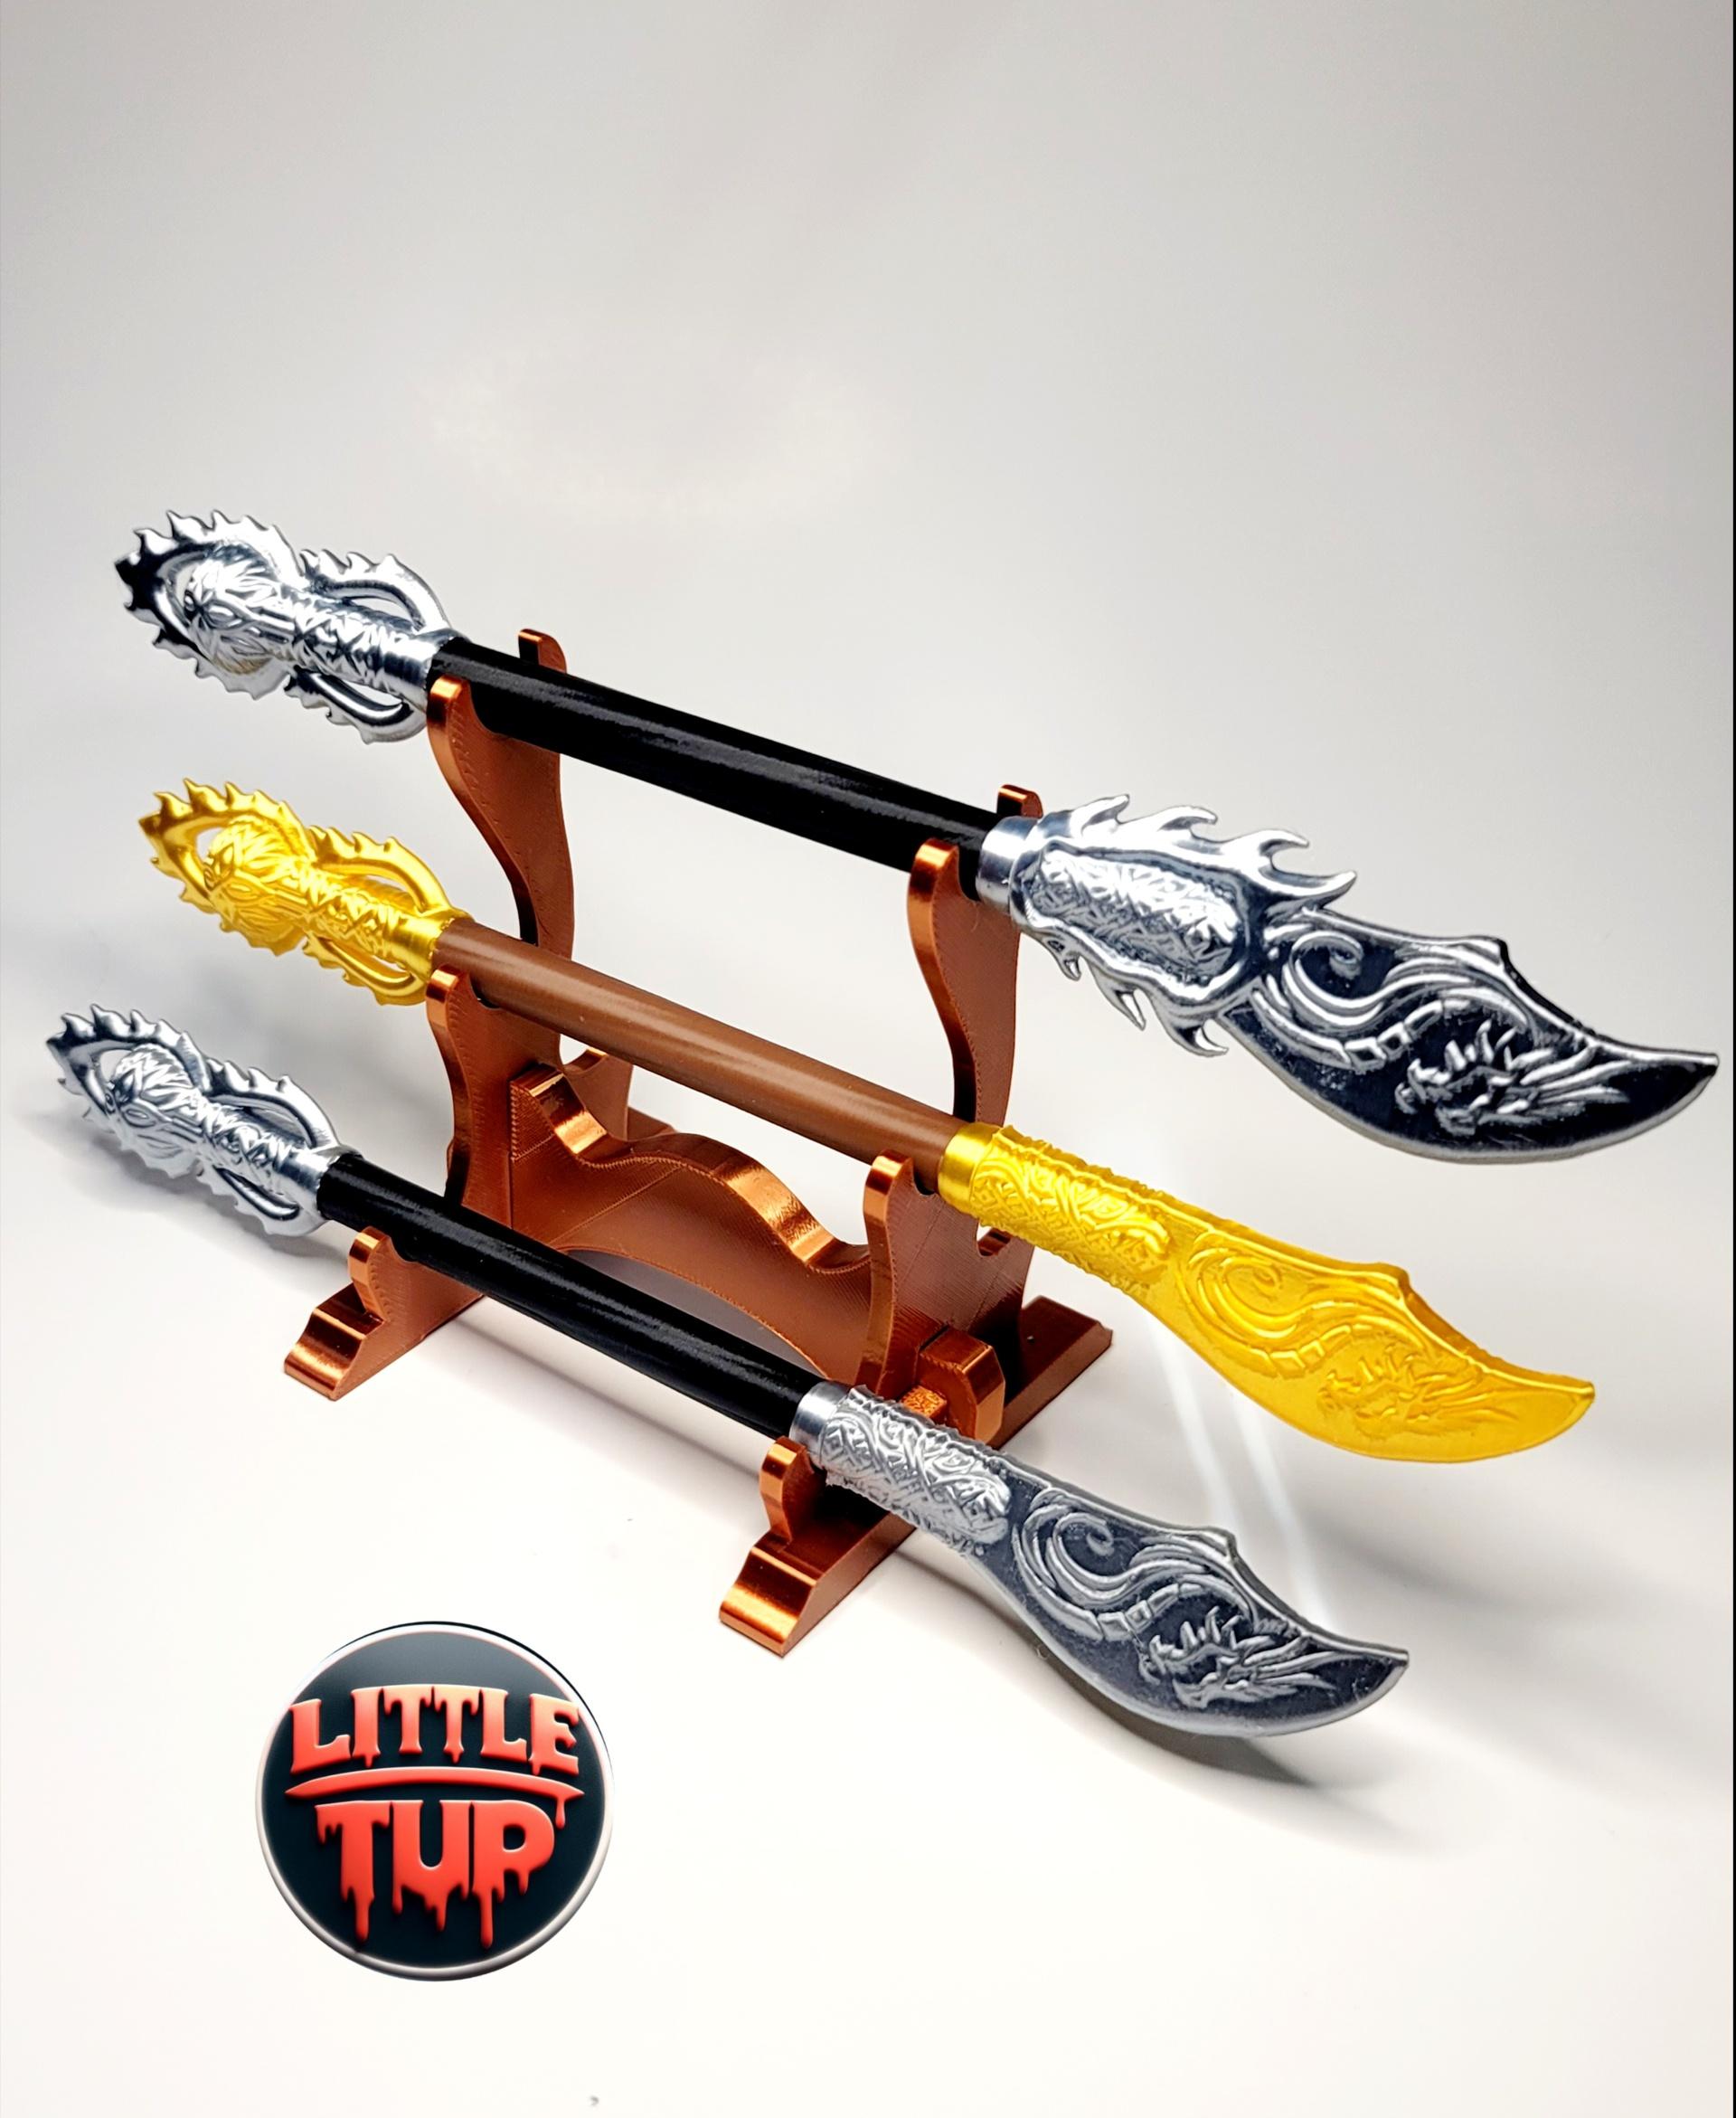 Hobby Knife Tool Stand Set 3d model